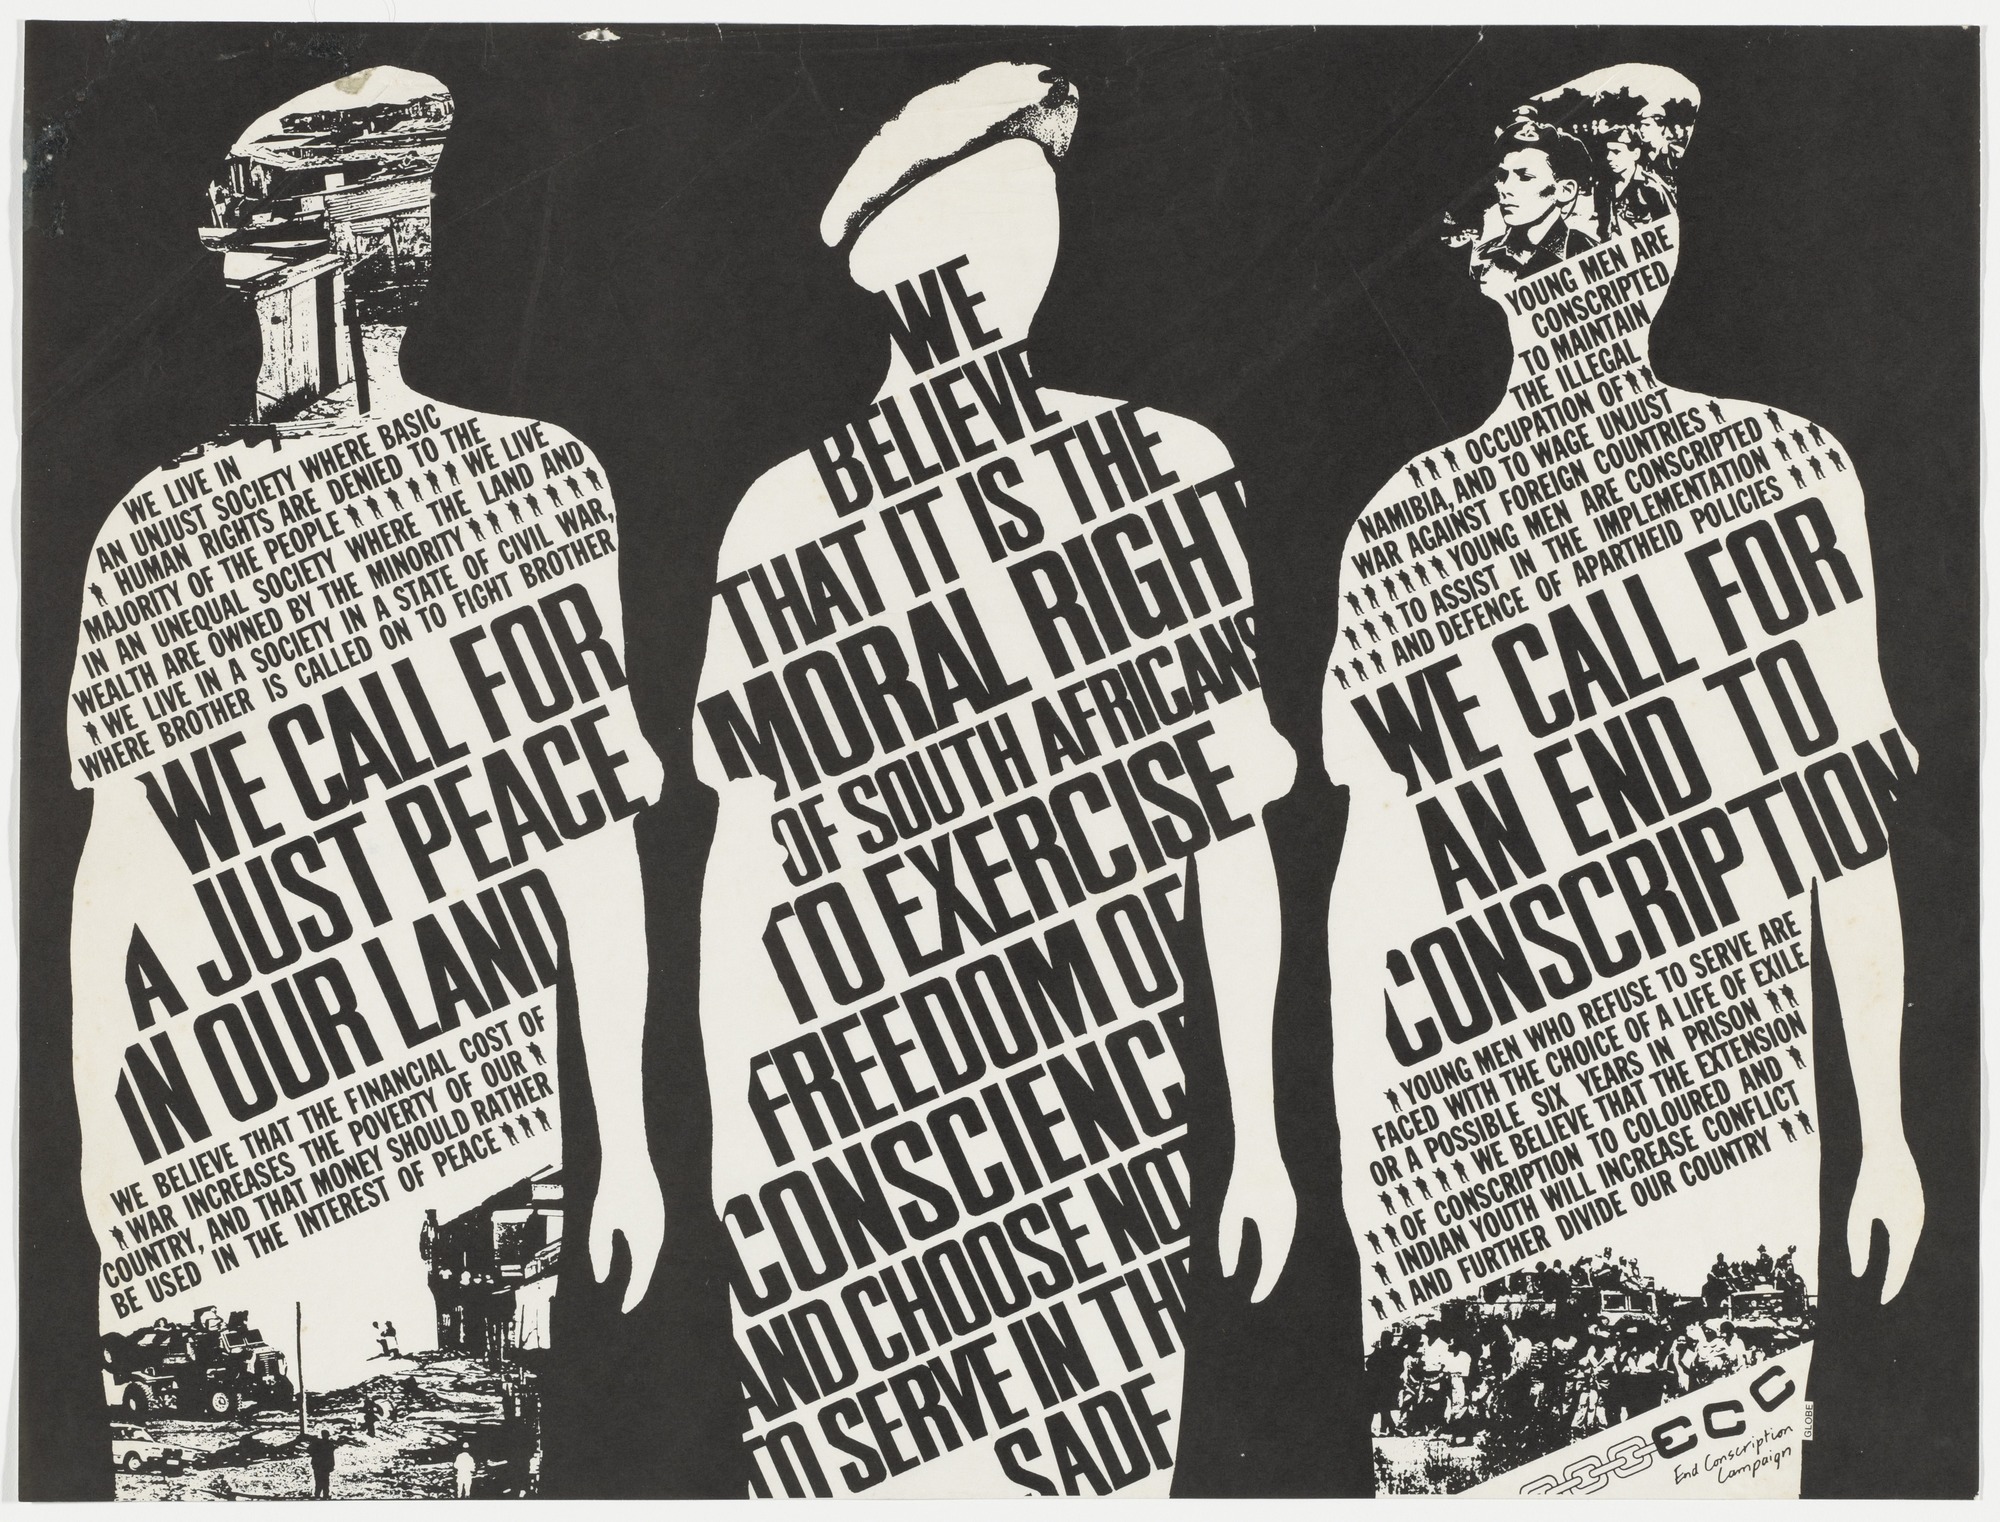 End-Conscription-Campaign-ECC_We-Call for-an-End-to-Conscription_1986